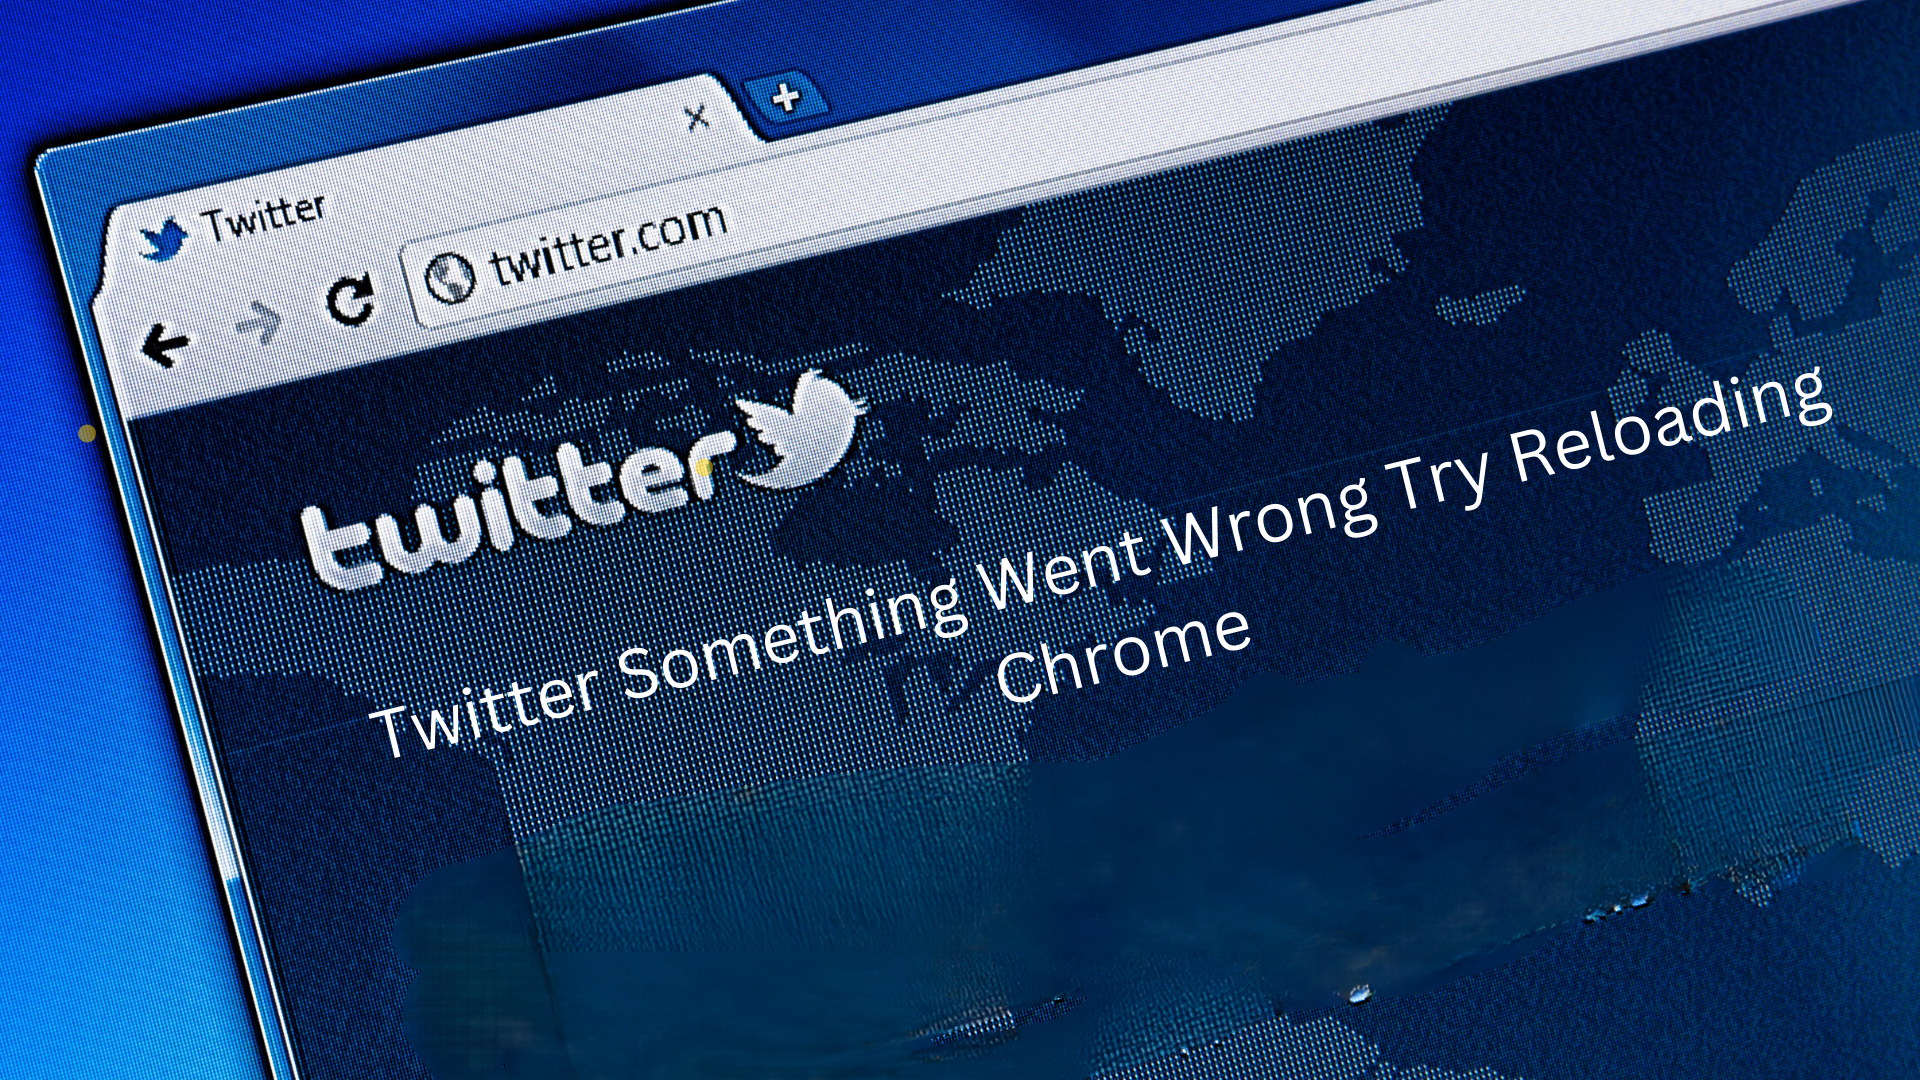 Twitter Something Went Wrong Try Reloading Chrome